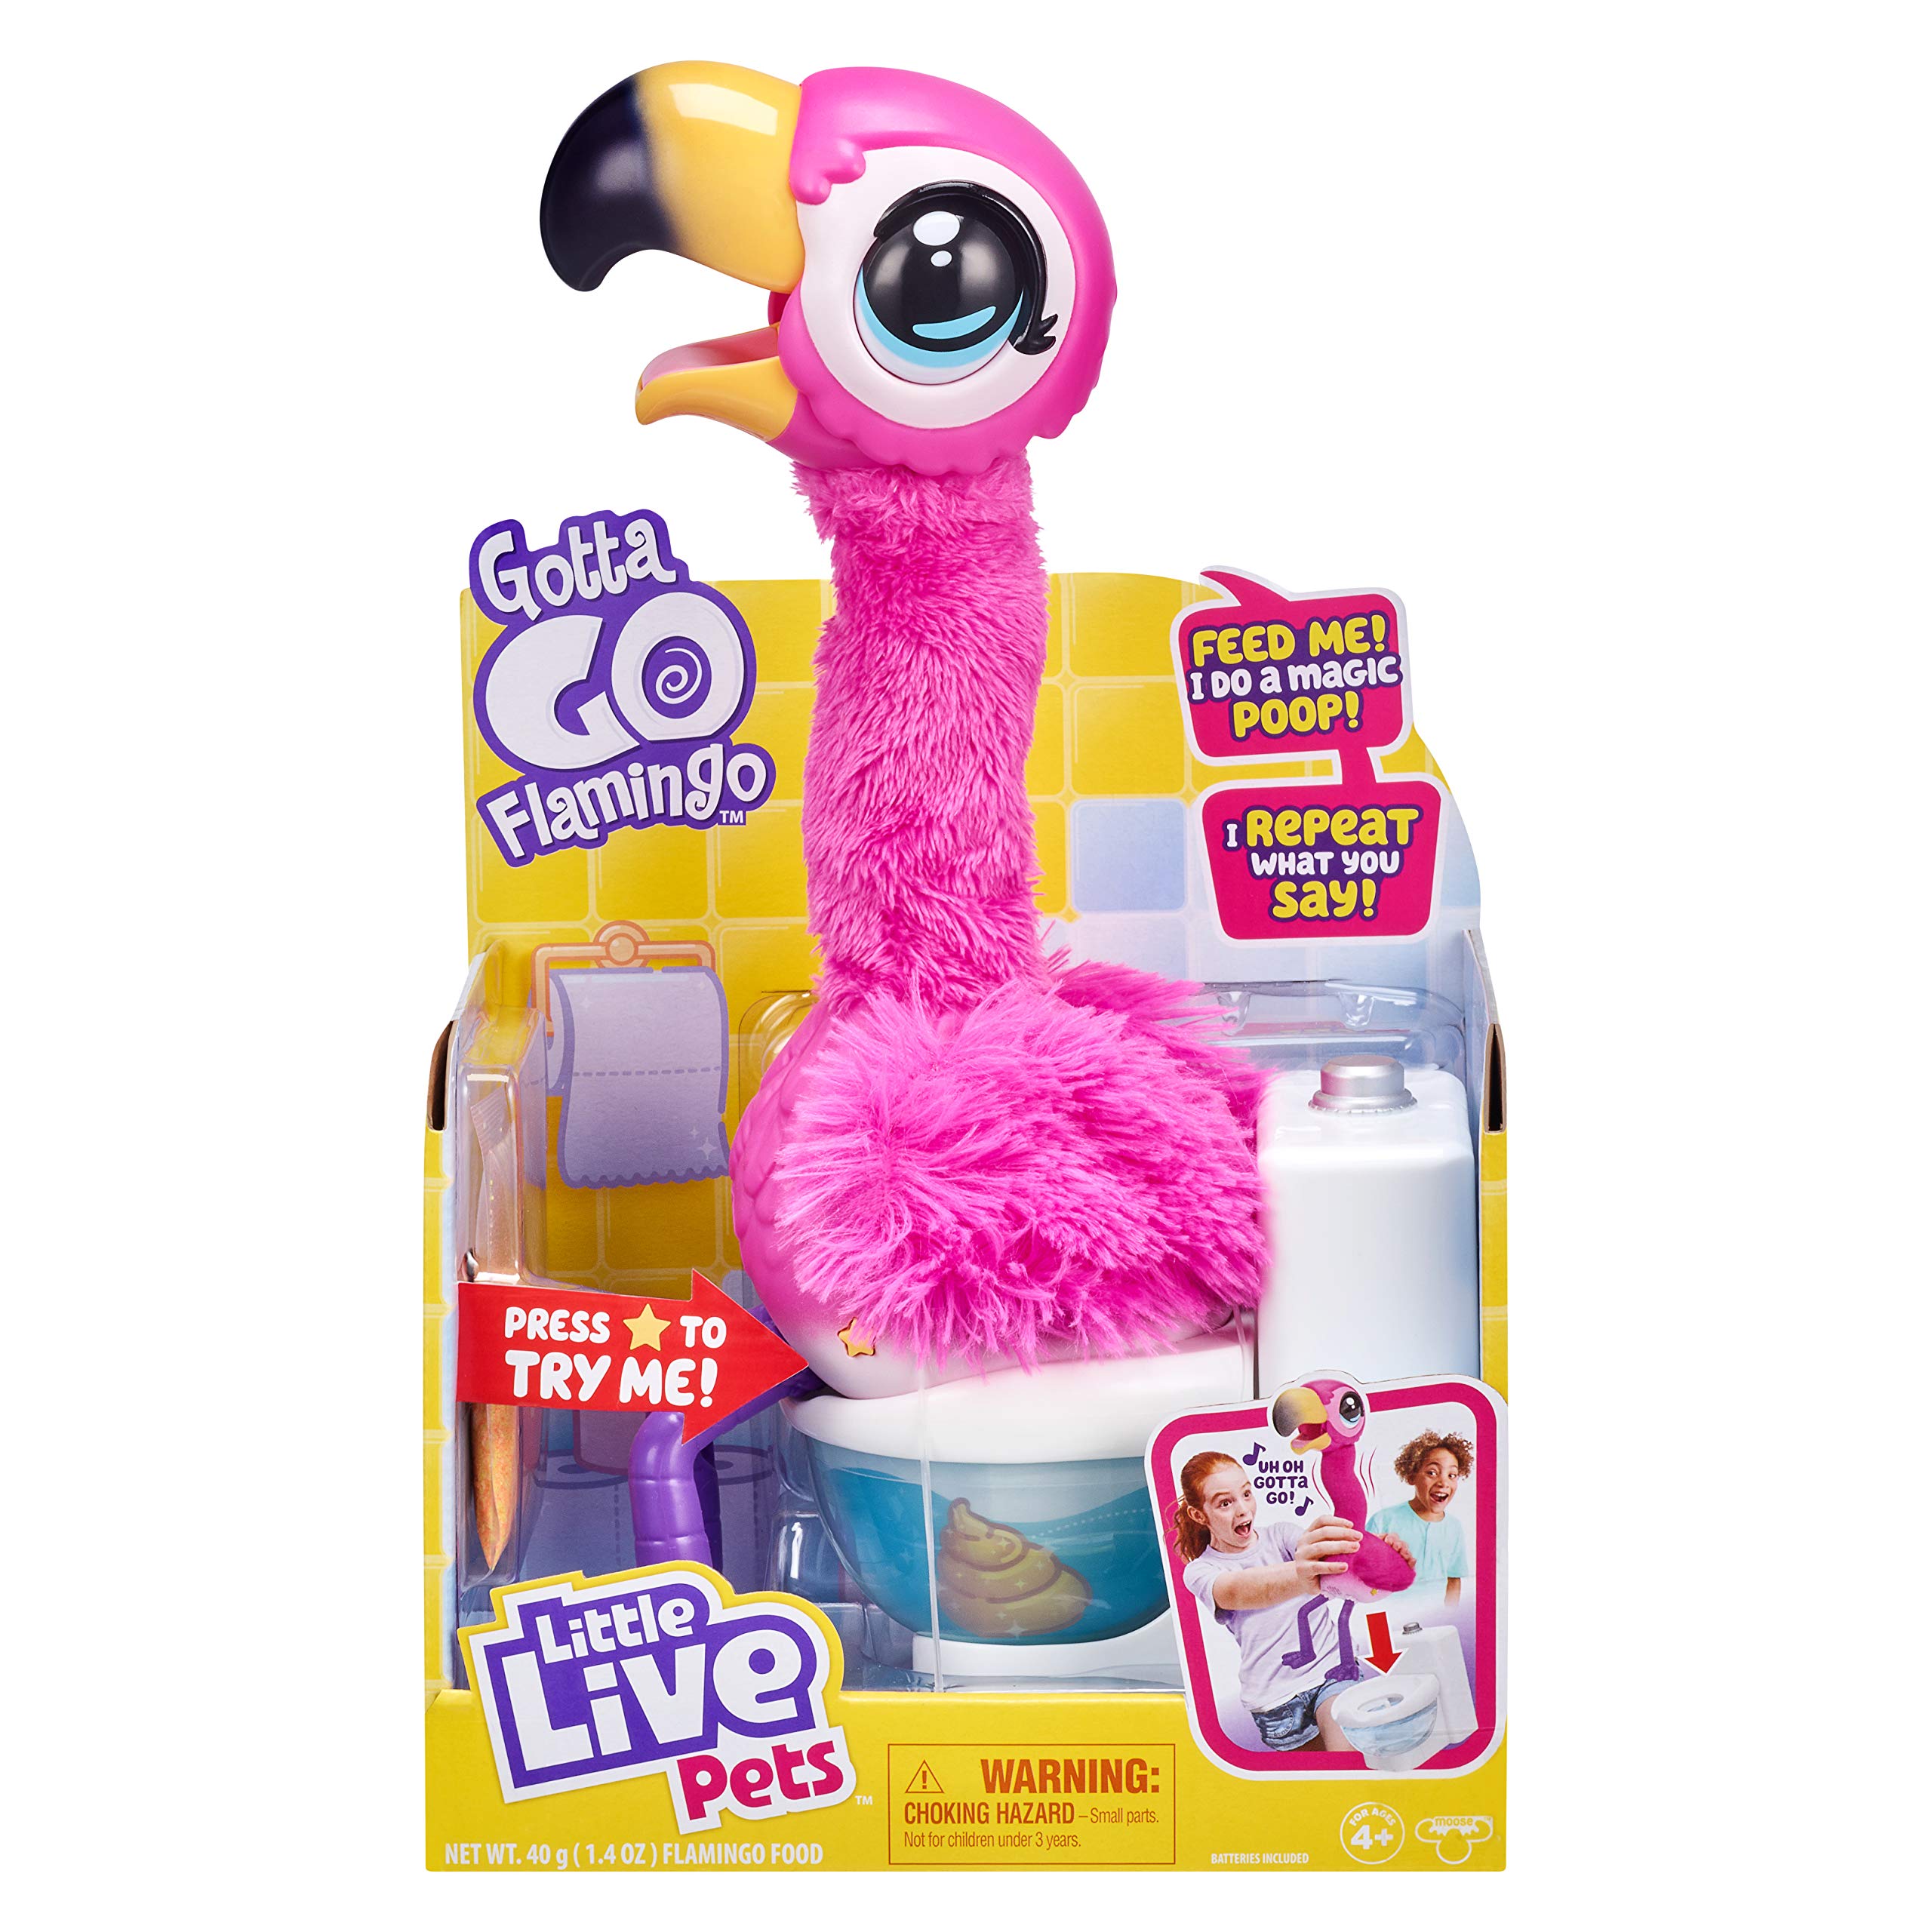 Gotta Go Flamingo Little Live Sherbet Interactive Electronic Plush Doll Toy NEW 